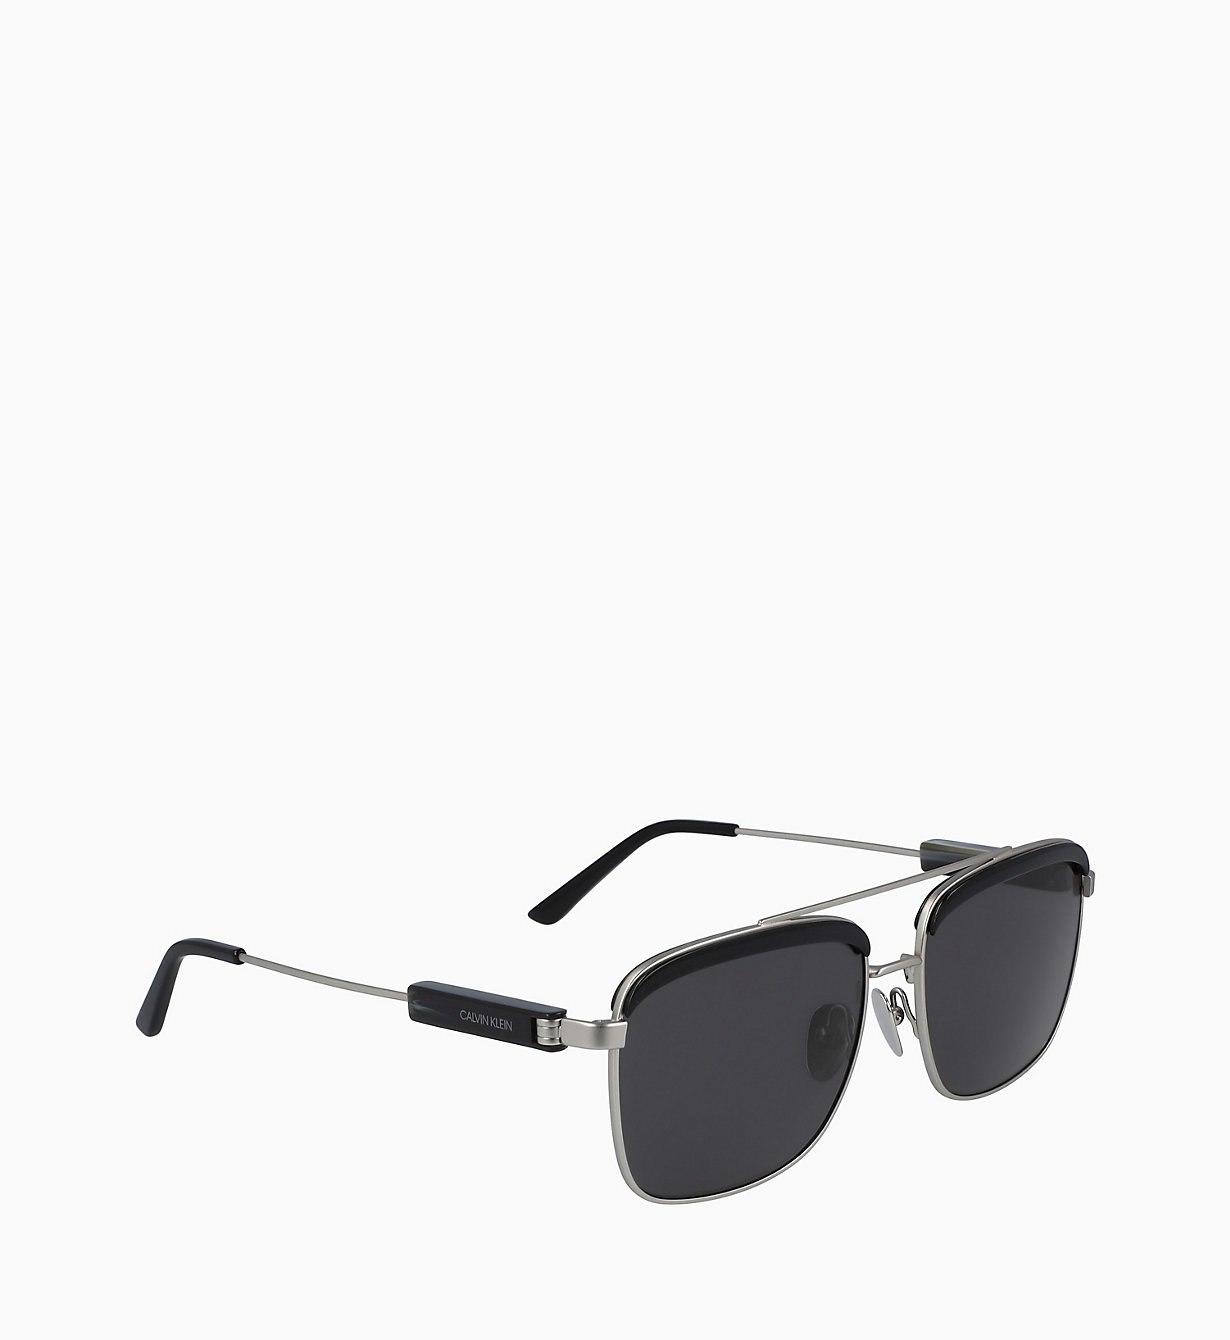 Buy Calvin Klein Fashion men's Sunglasses CK20122S-001 - Ashford.com-tuongthan.vn